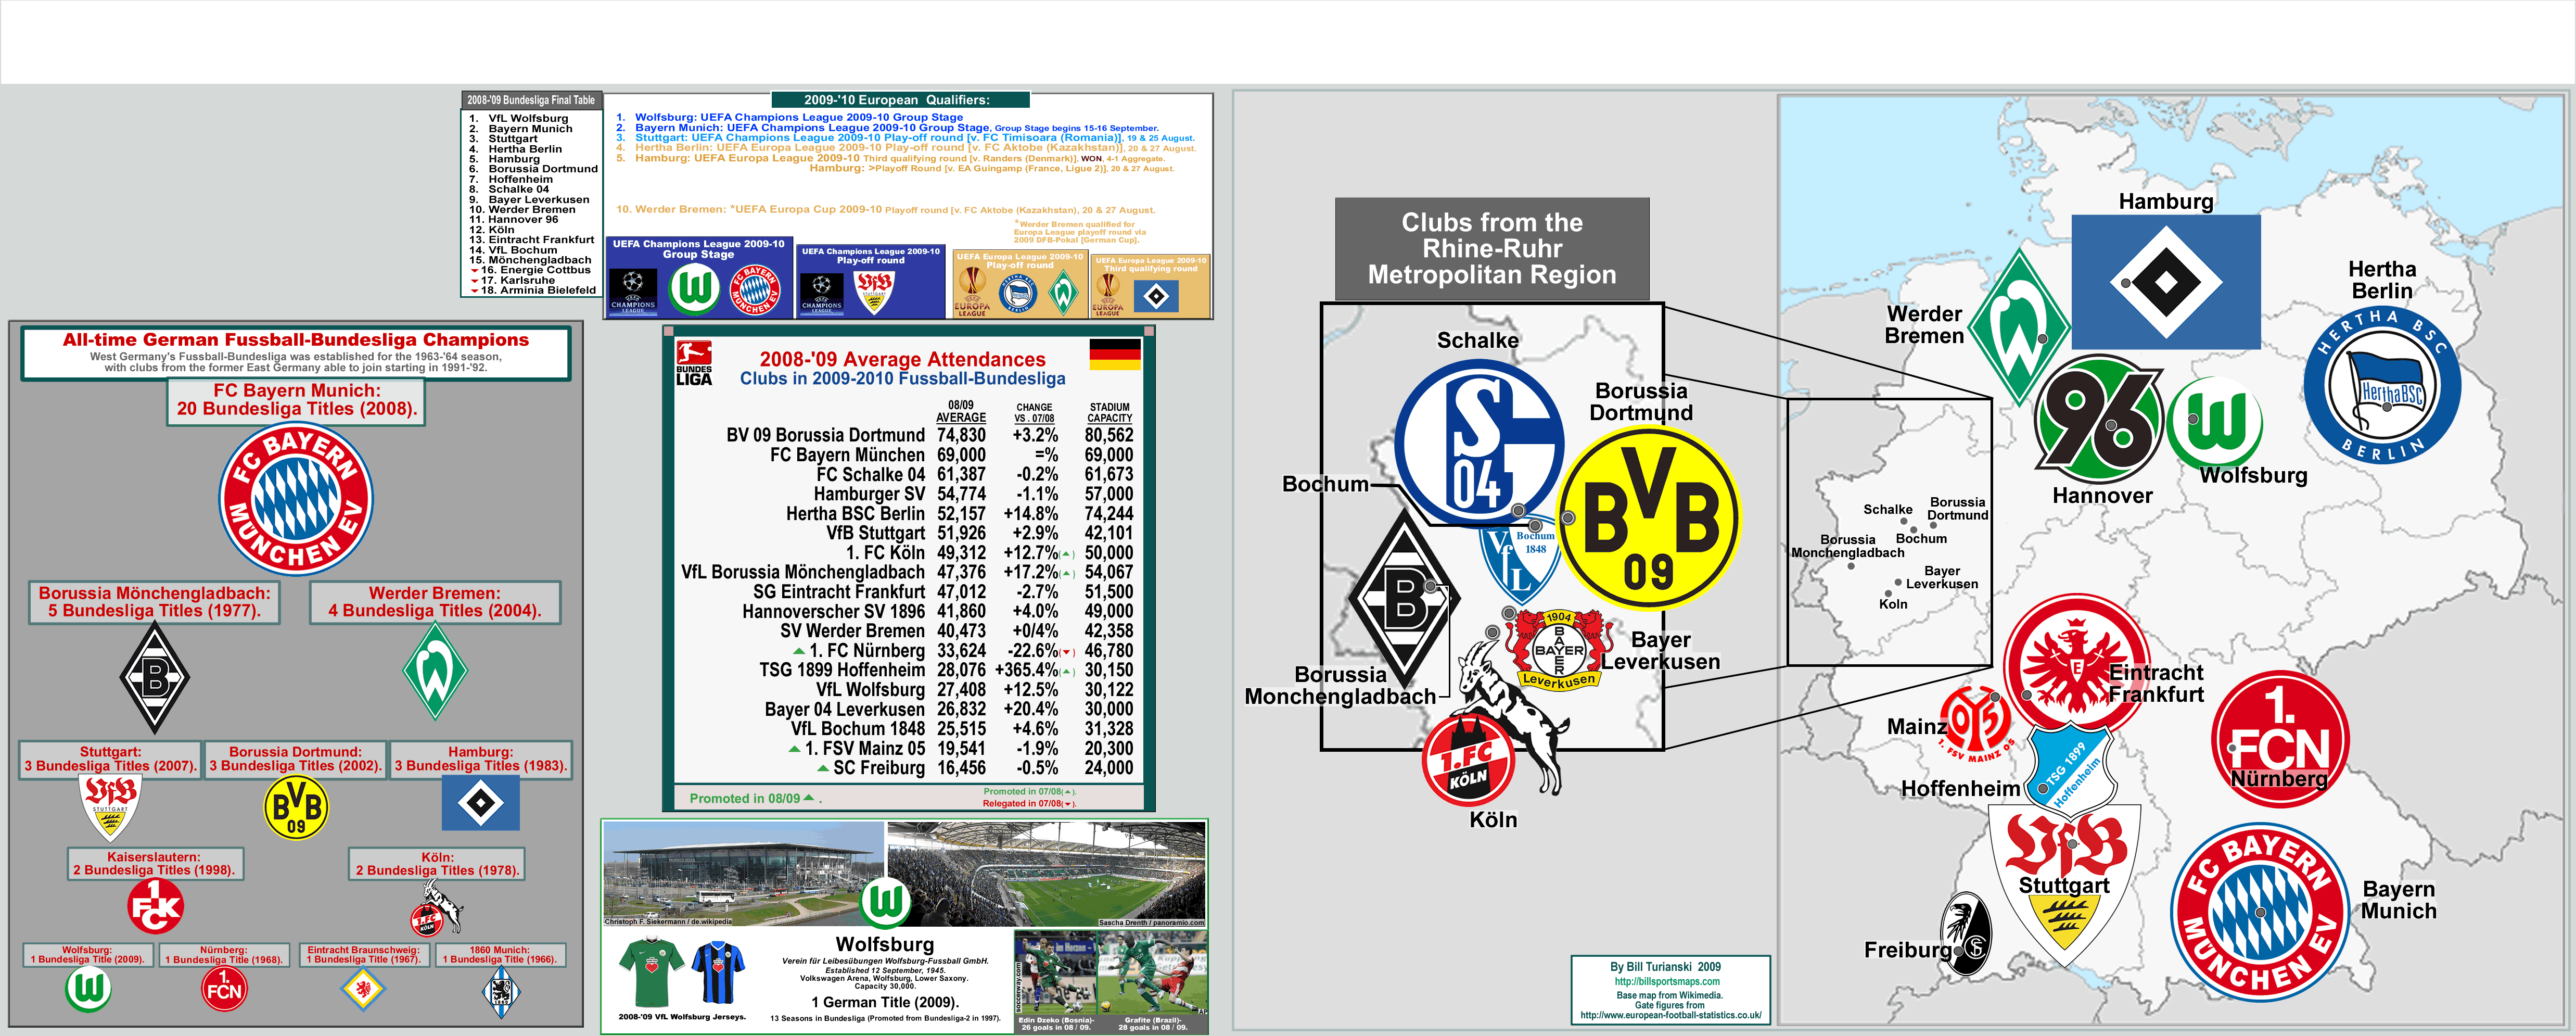 Programm 1995/96 1 FC Nürnberg VfL Wolfsburg 